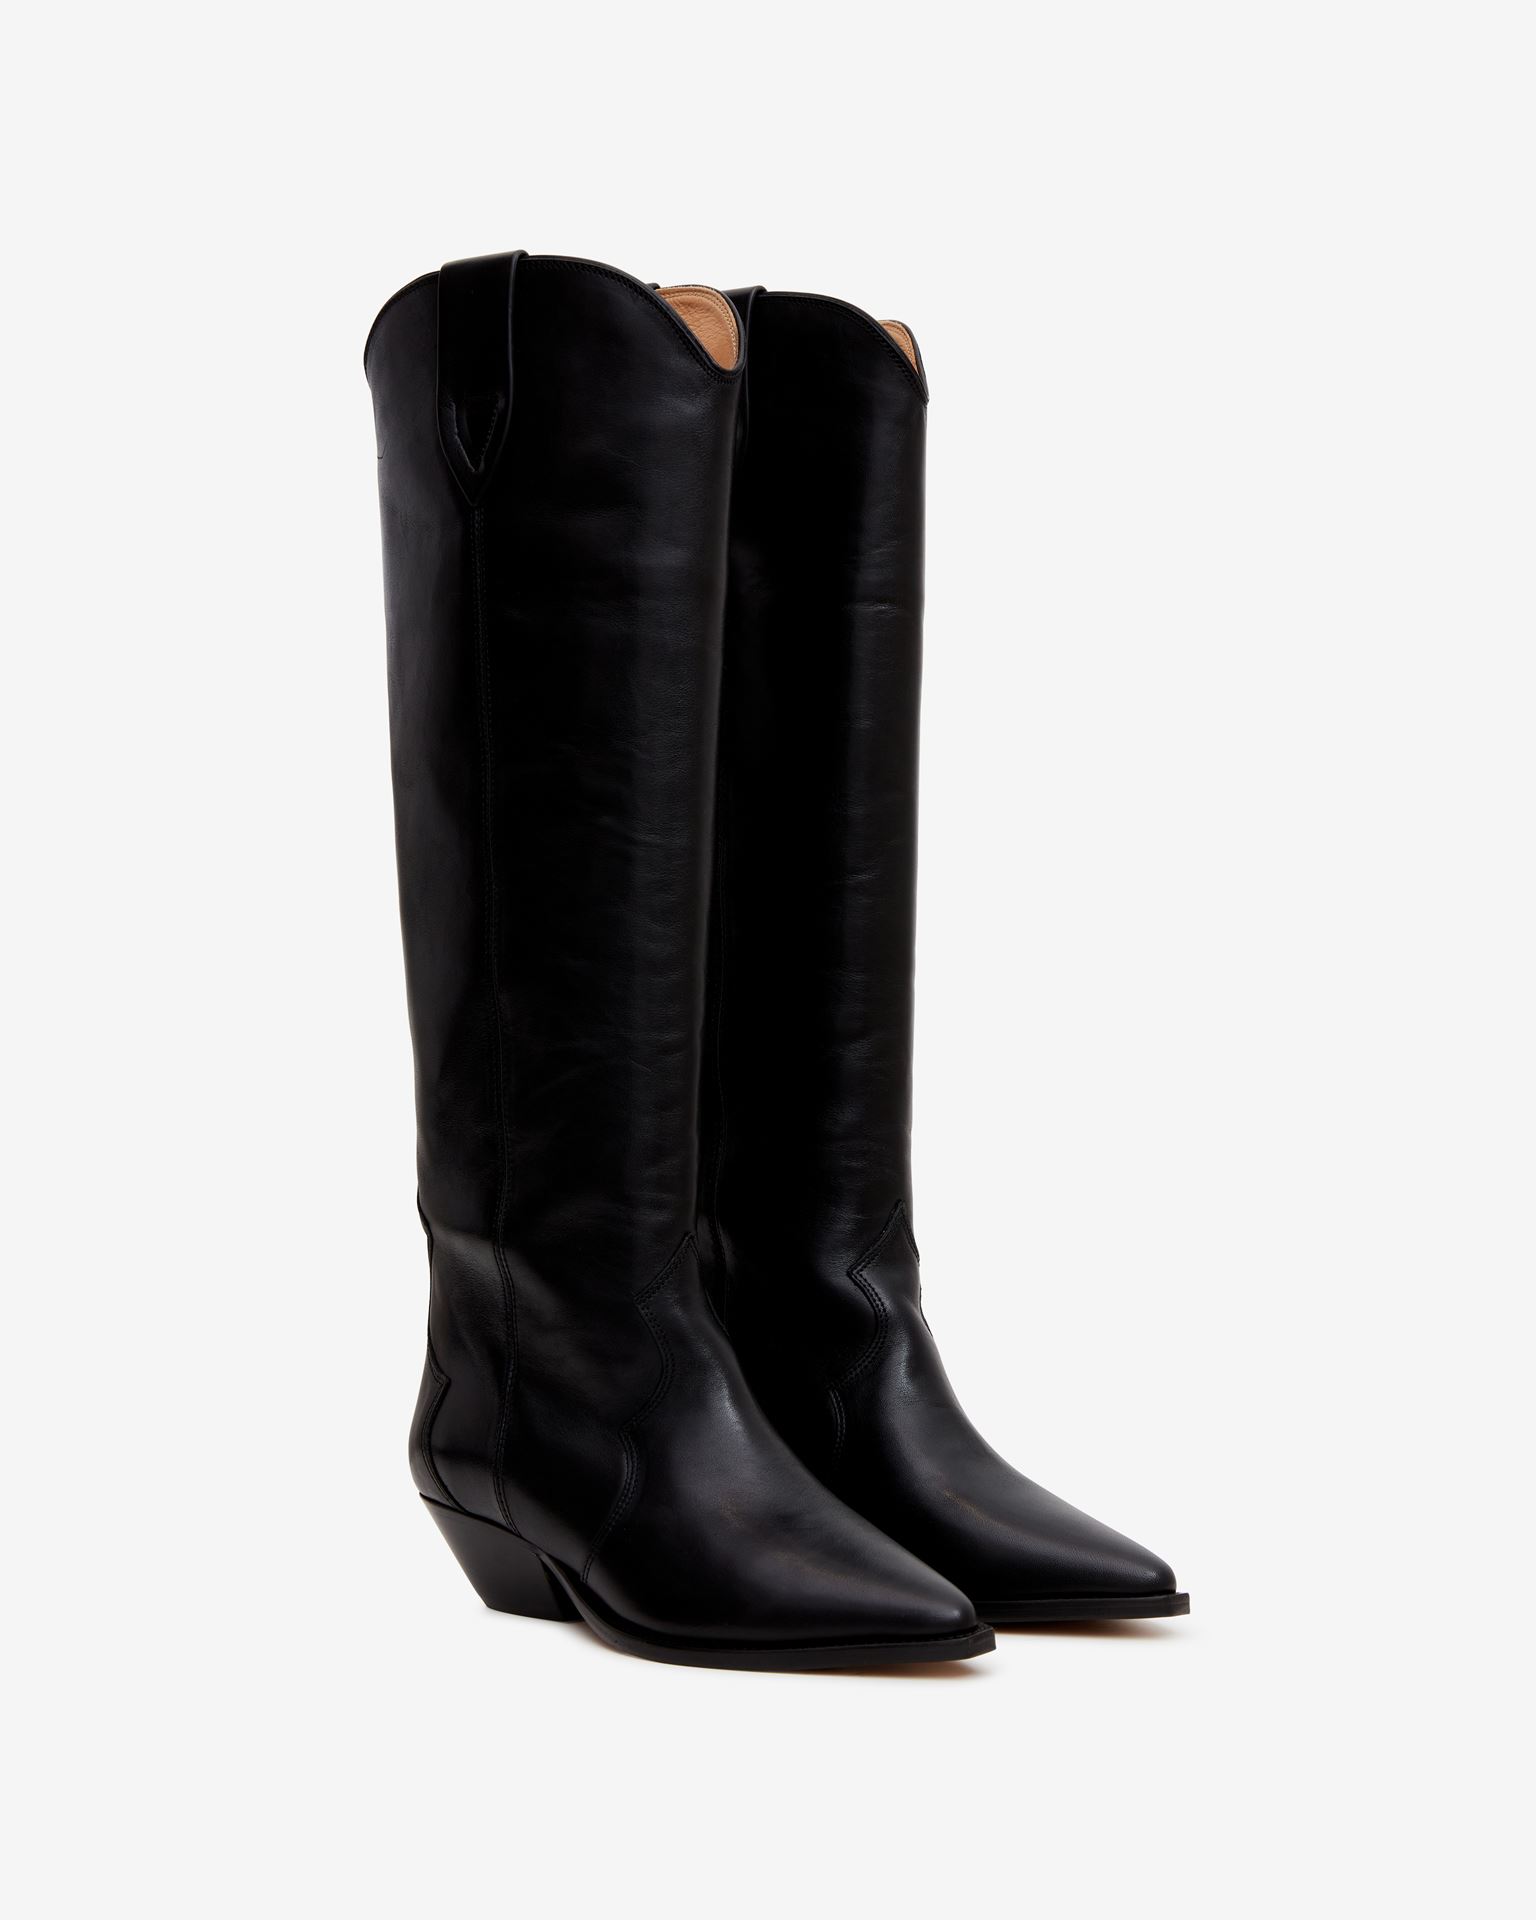 Isabel Marant, Denvee Suede Leather Boots - Women - Black